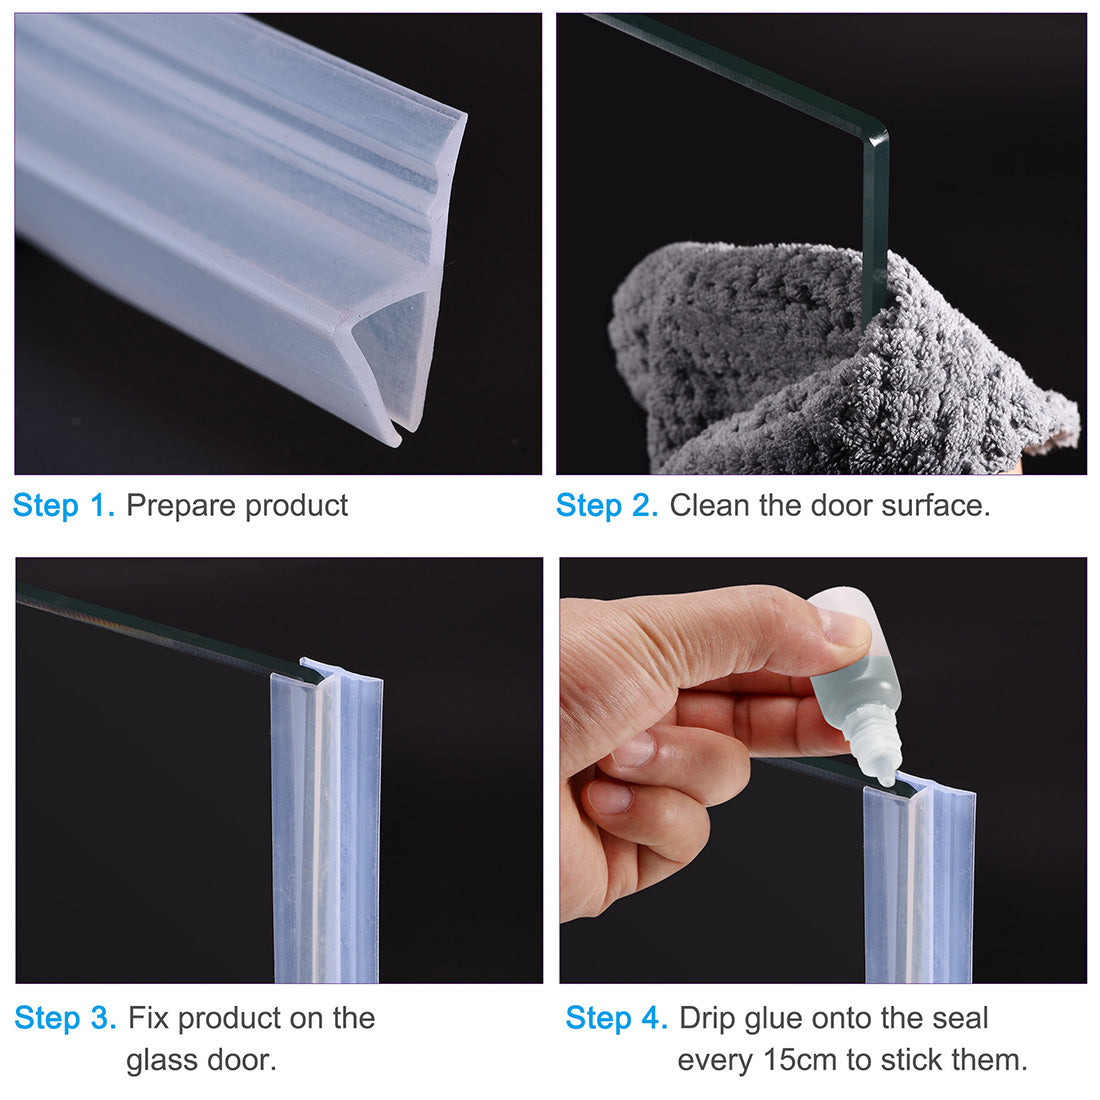 Uxcell Uxcell Frameless Glass Shower Door Sweep - Door Bottom Side Seal Strip F-Type with 3/4"(20mm) Drip Rail - 1/2"(12mm) Glass x 118"(3000mm) Length